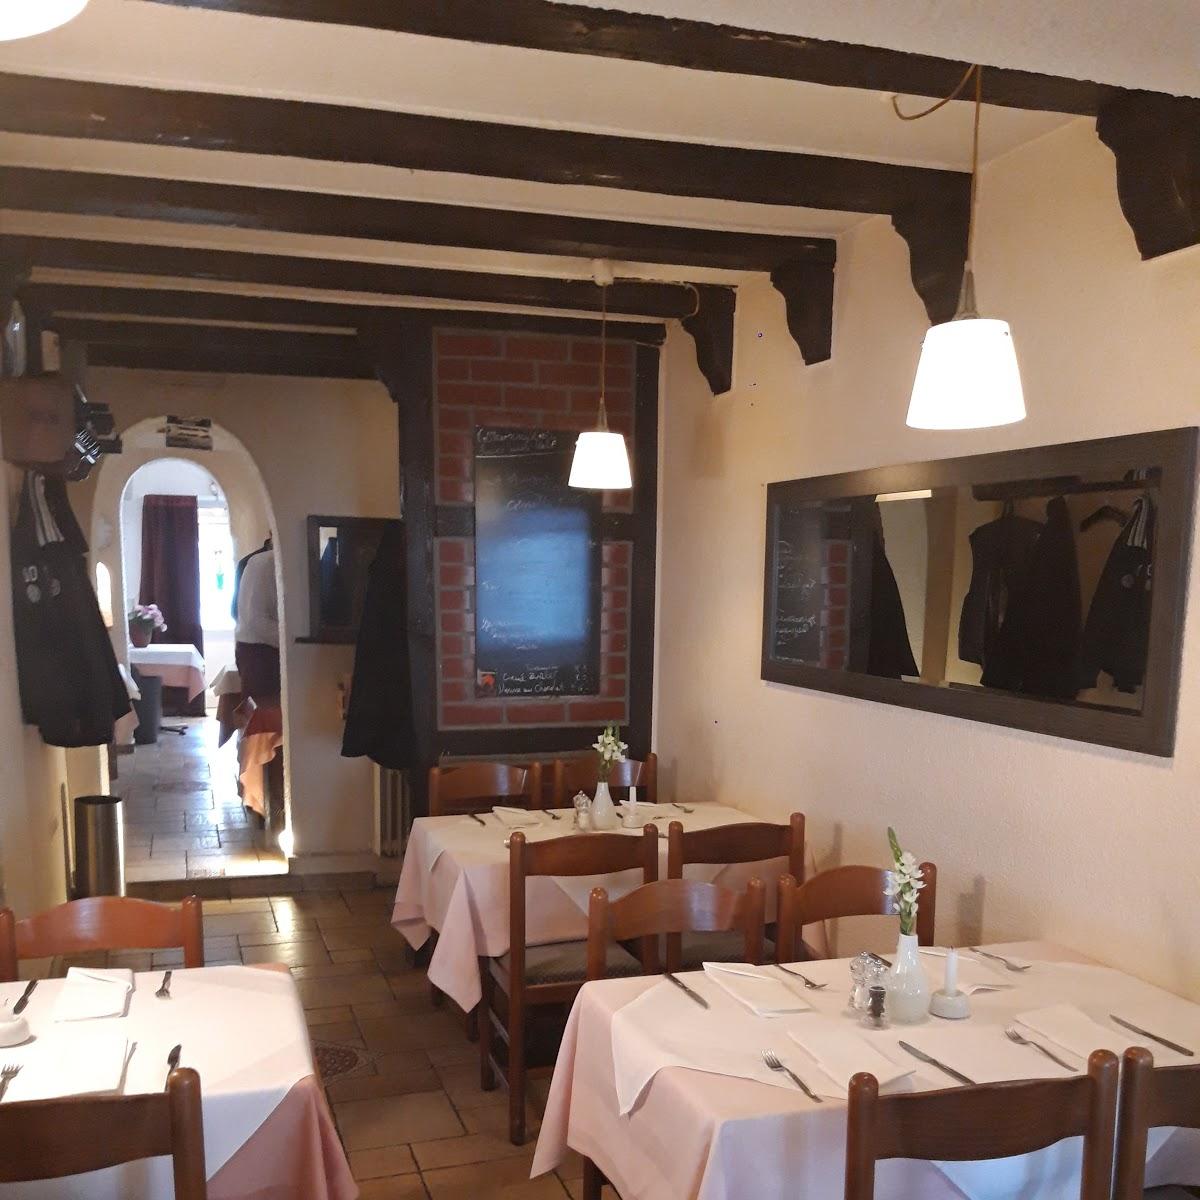 Restaurant "Ristorante Borsalino" in Siegburg